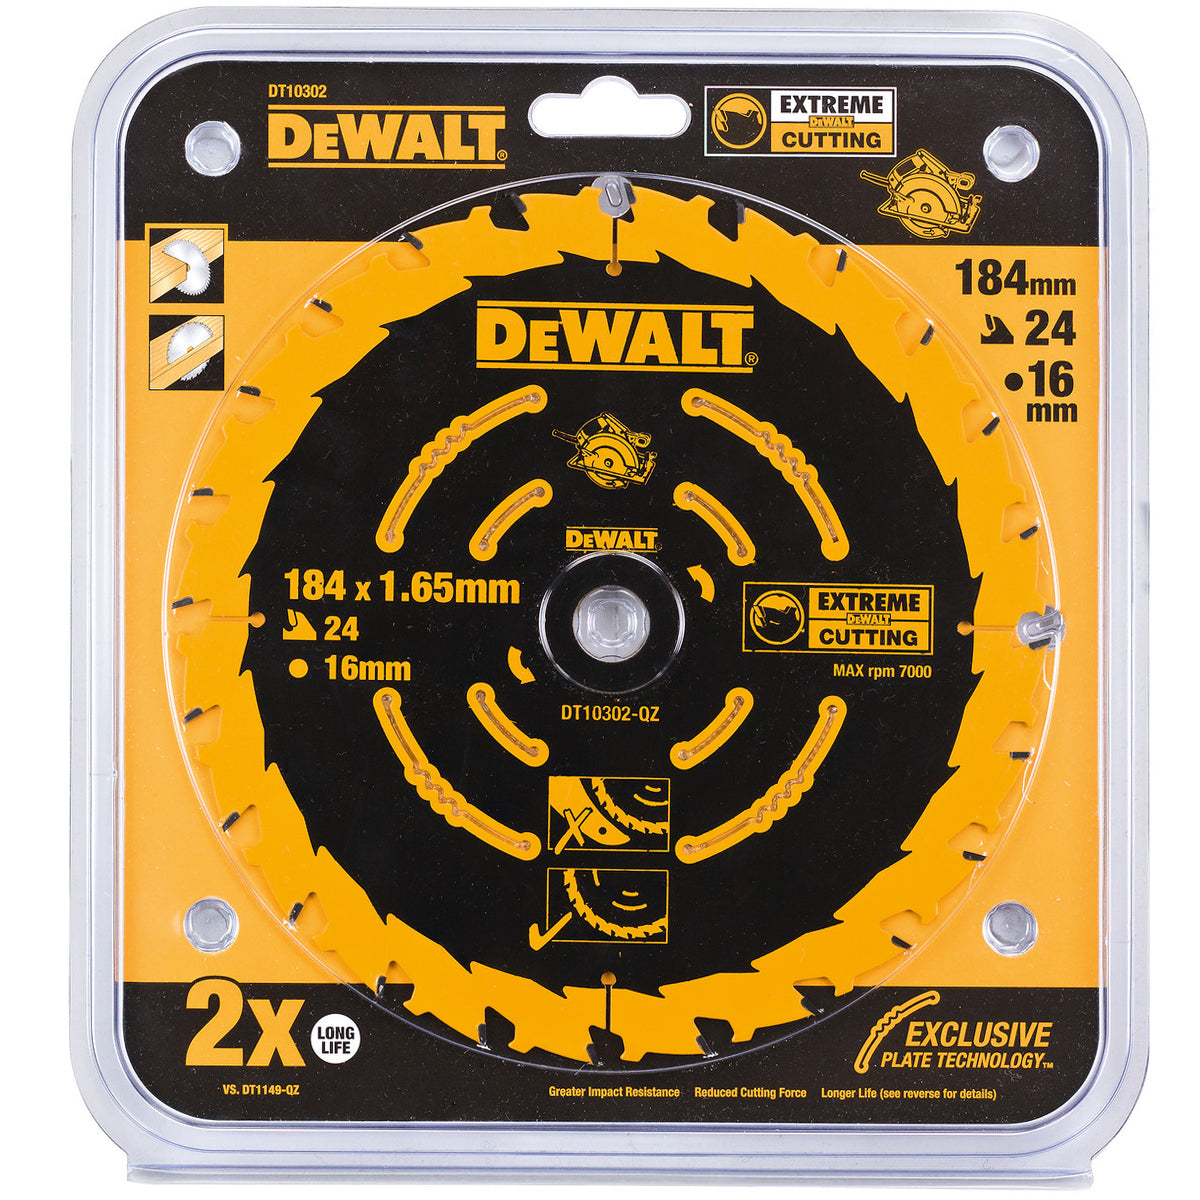 Dewalt DT10302-QZ 184mm Extreme Framing Circular Saw Blade 24T